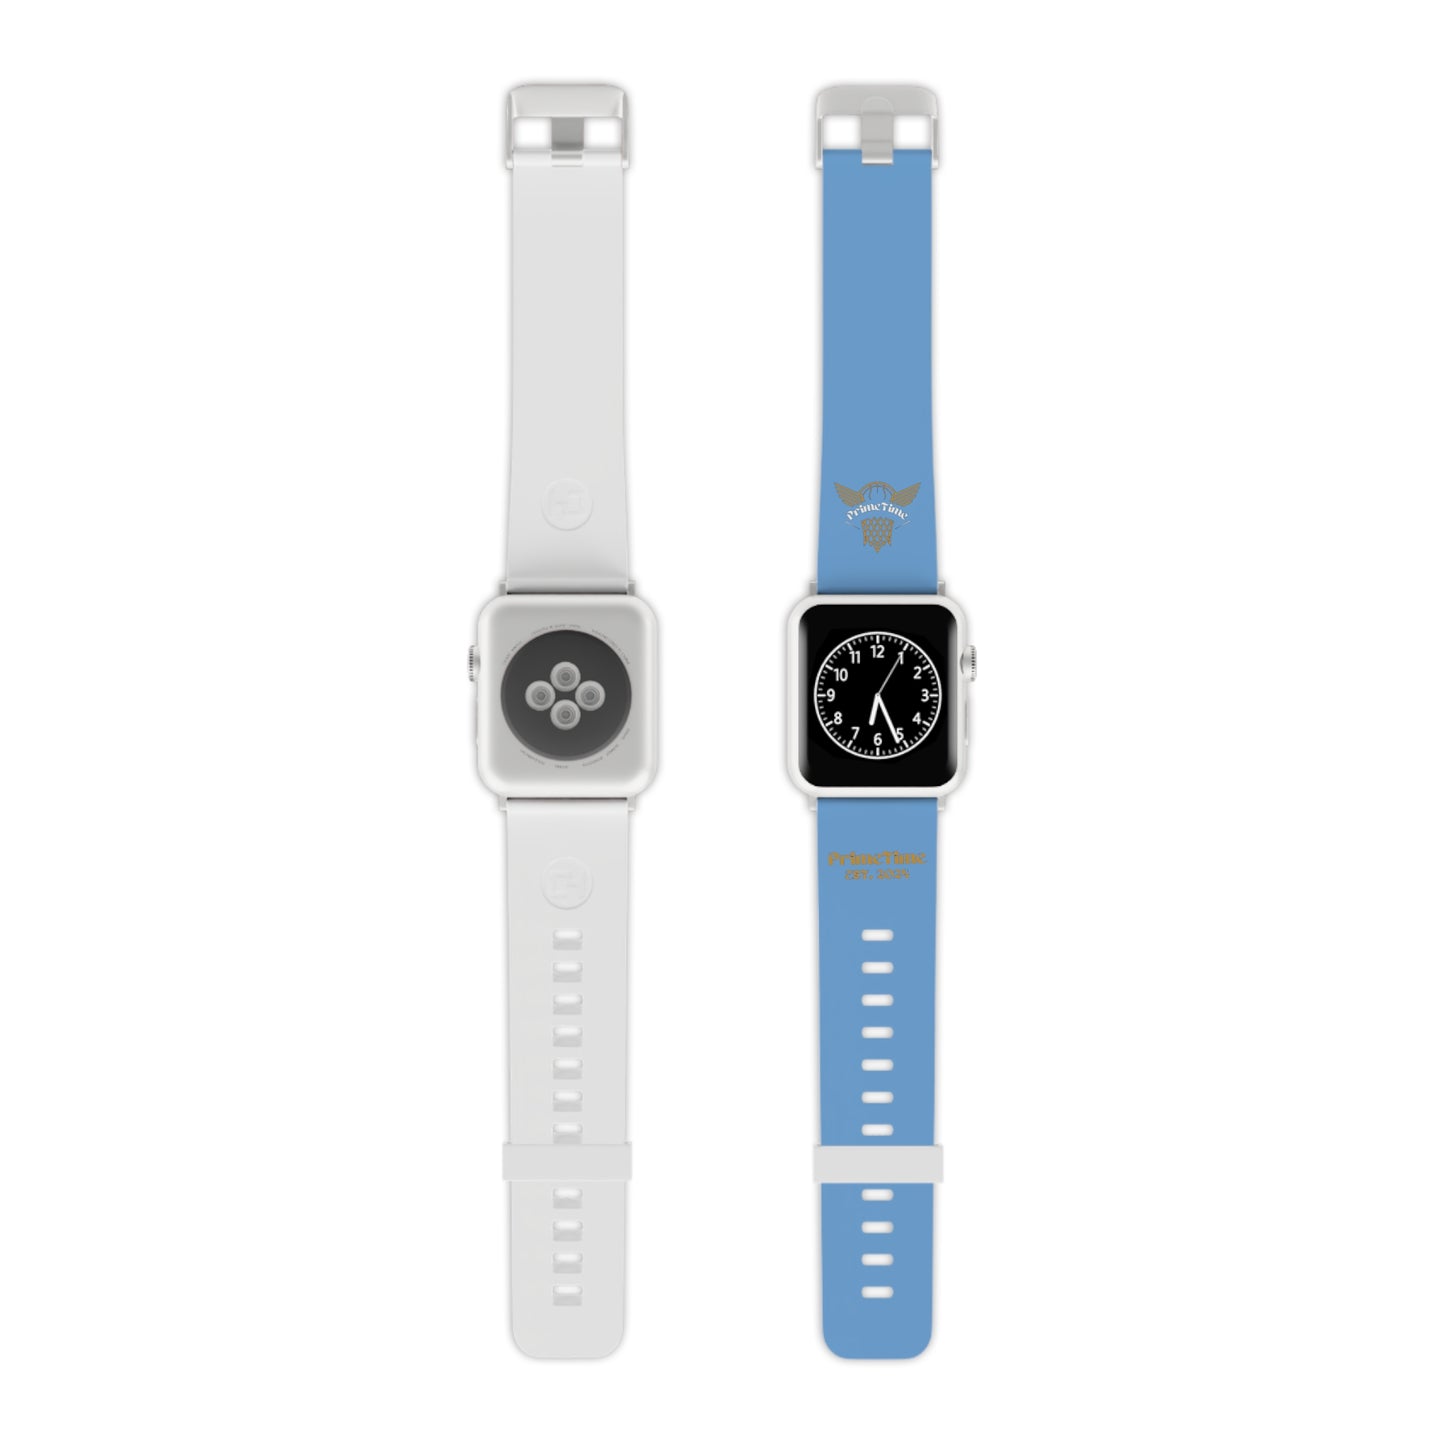 PrimeTime Apple Watch Band (Blue Lightning Edition)